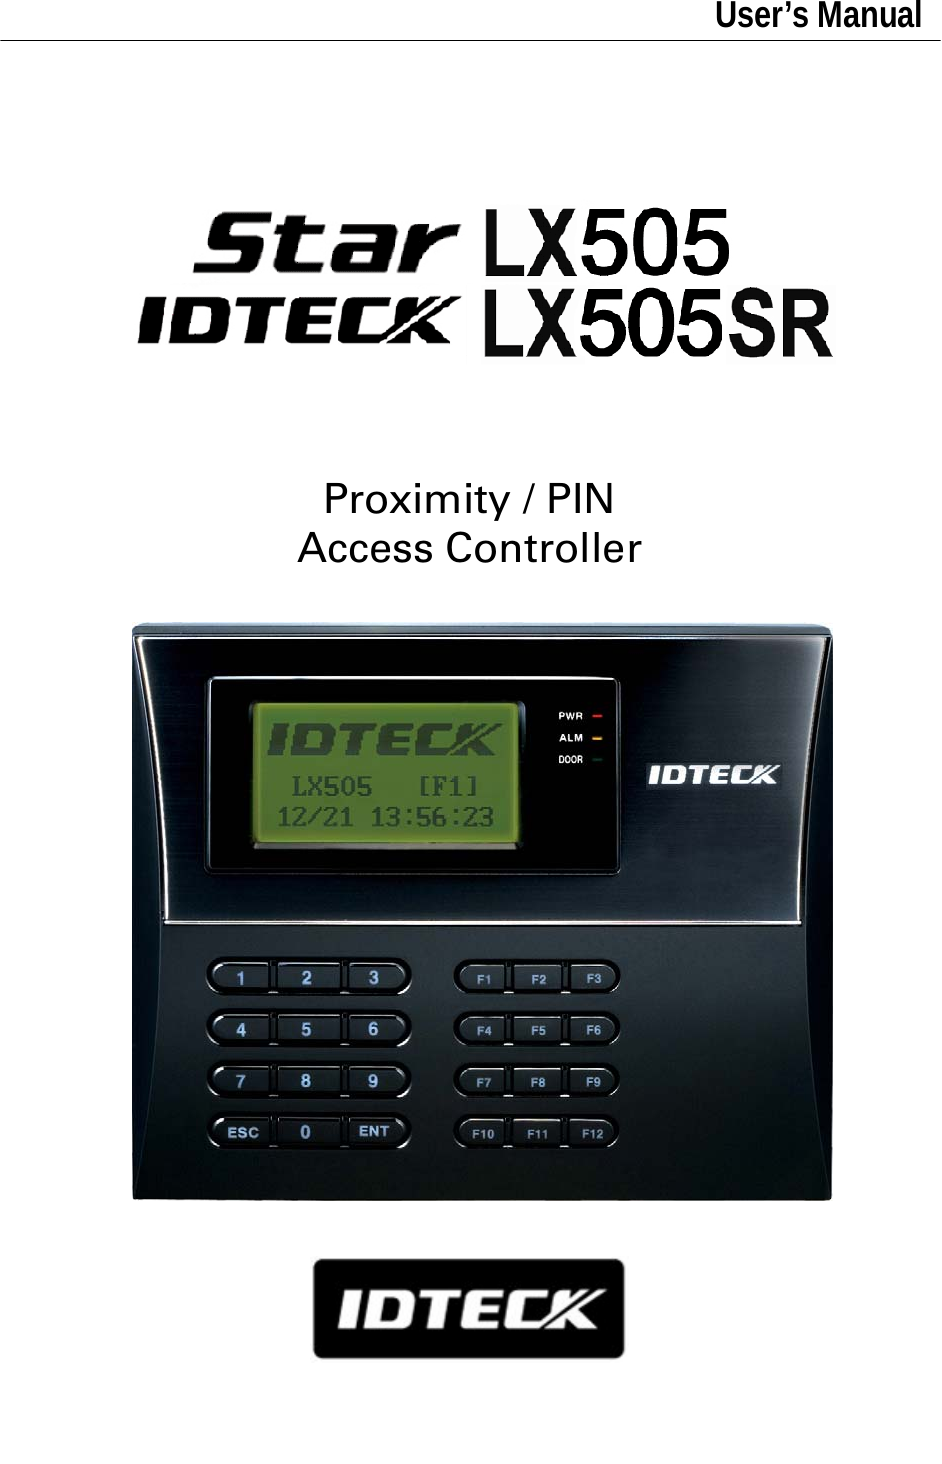      User’s Manual          Proximity / PIN Access Controller                  